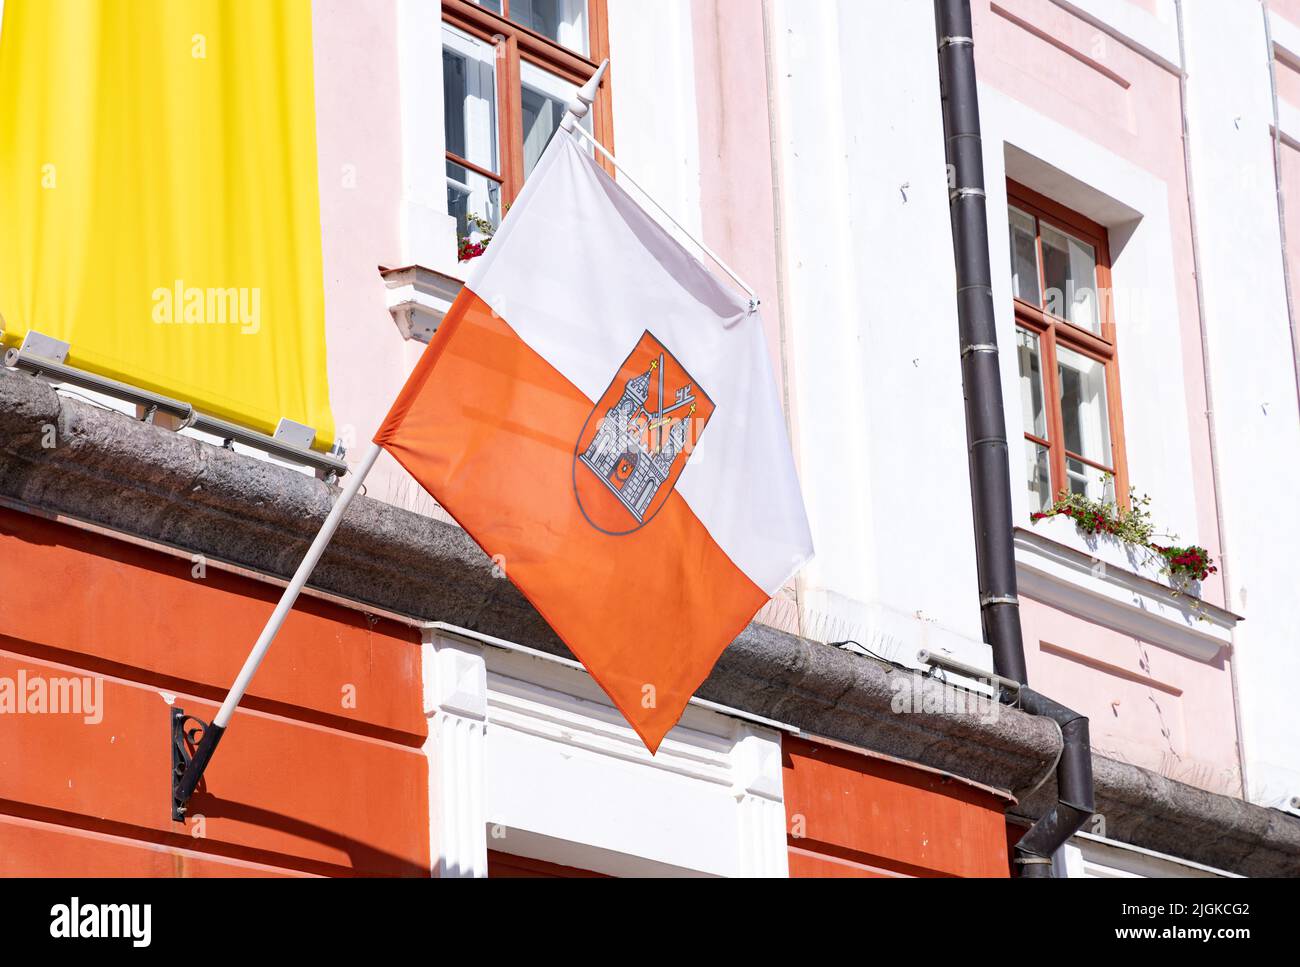 Drapeau de Tartu; drapeau de la ville de Tartu volant, Tartu, Estonie Europe Banque D'Images